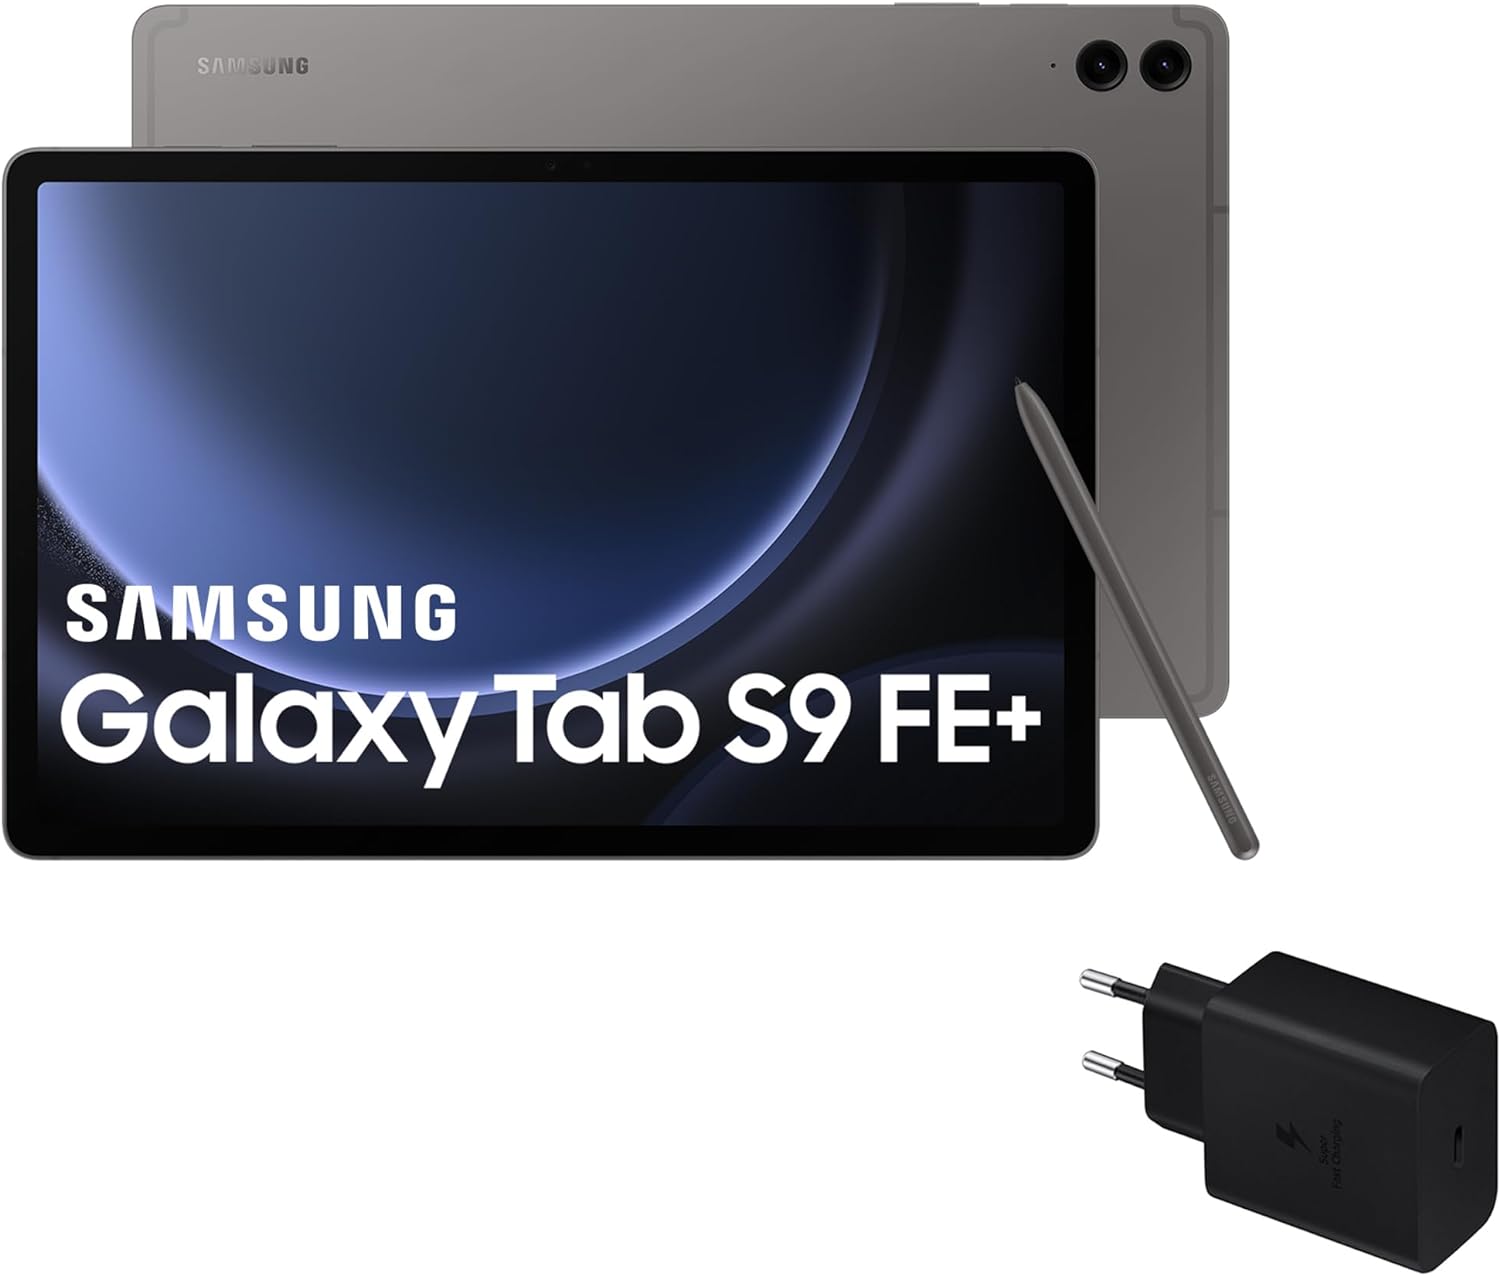 Samsung Galaxy Tab S9 FE+ vs Samsung Galaxy Tab S9 FE